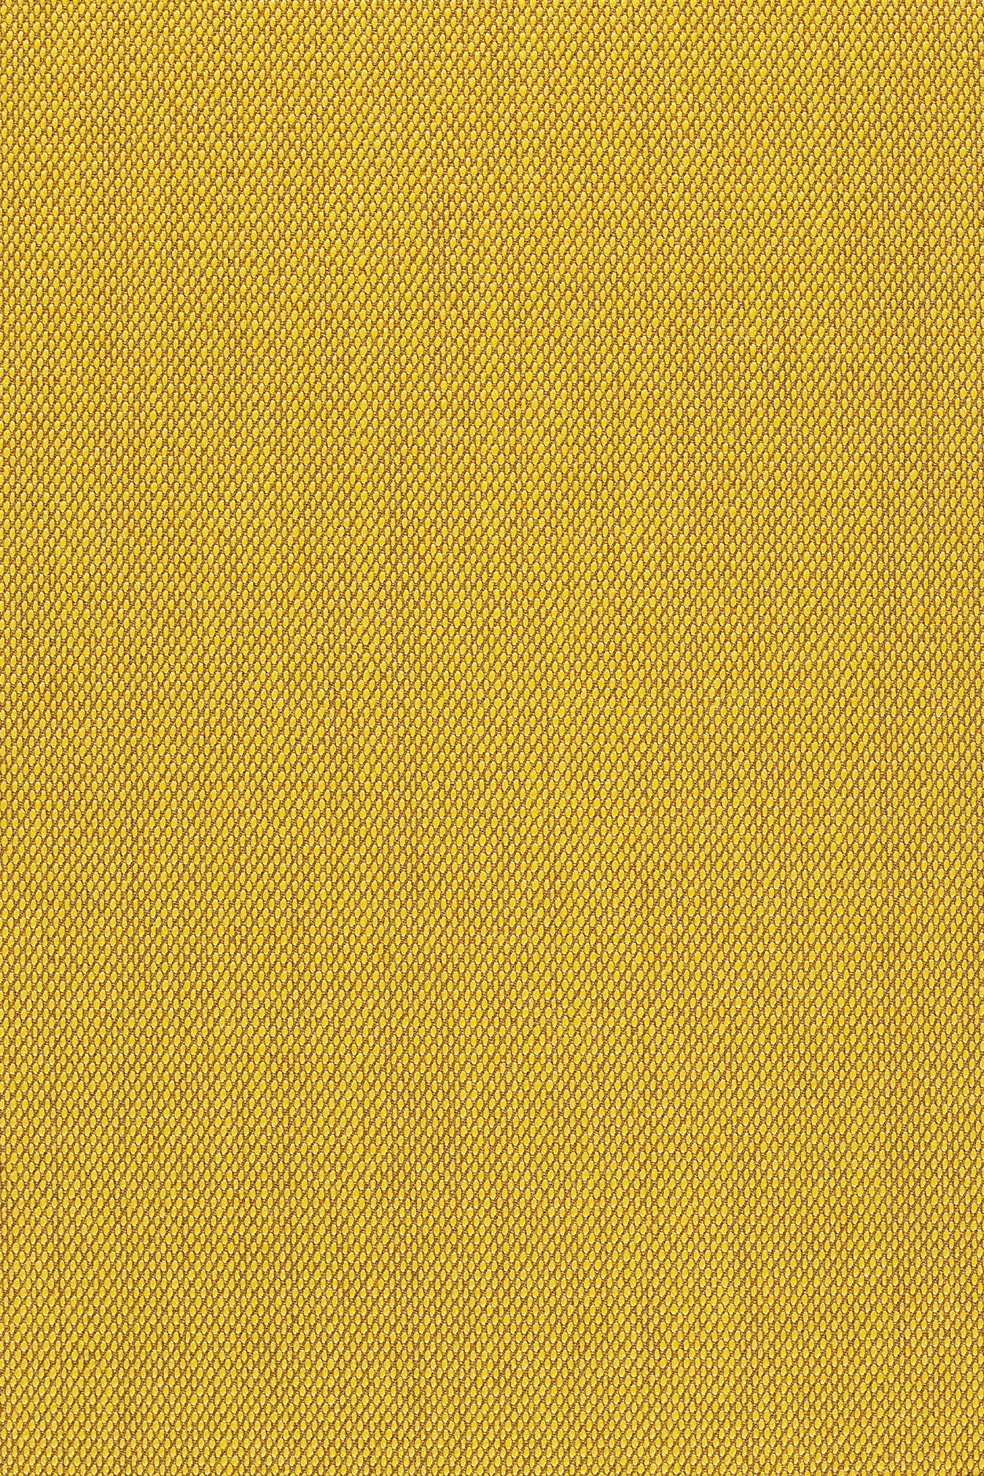 Fabric sample Steelcut Trio 3 453 yellow